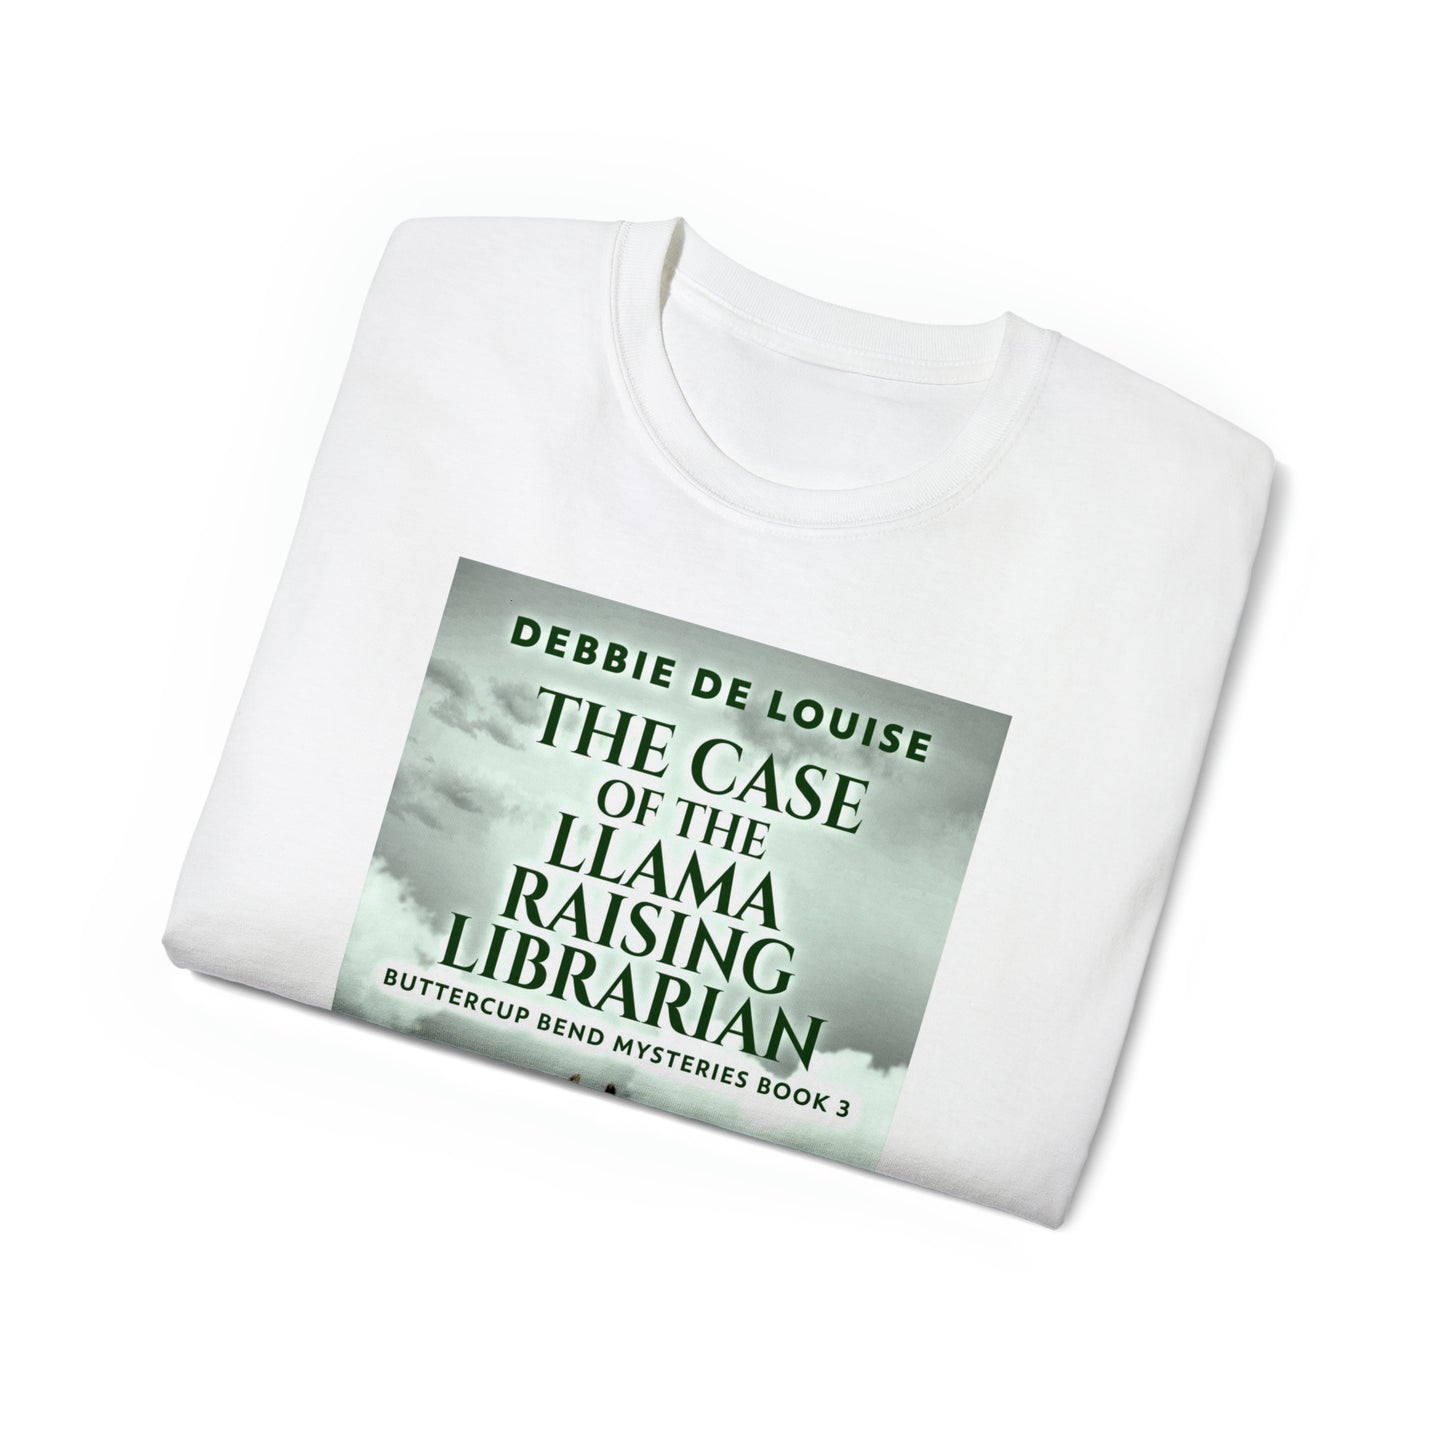 The Case of the Llama Raising Librarian - Unisex T-Shirt